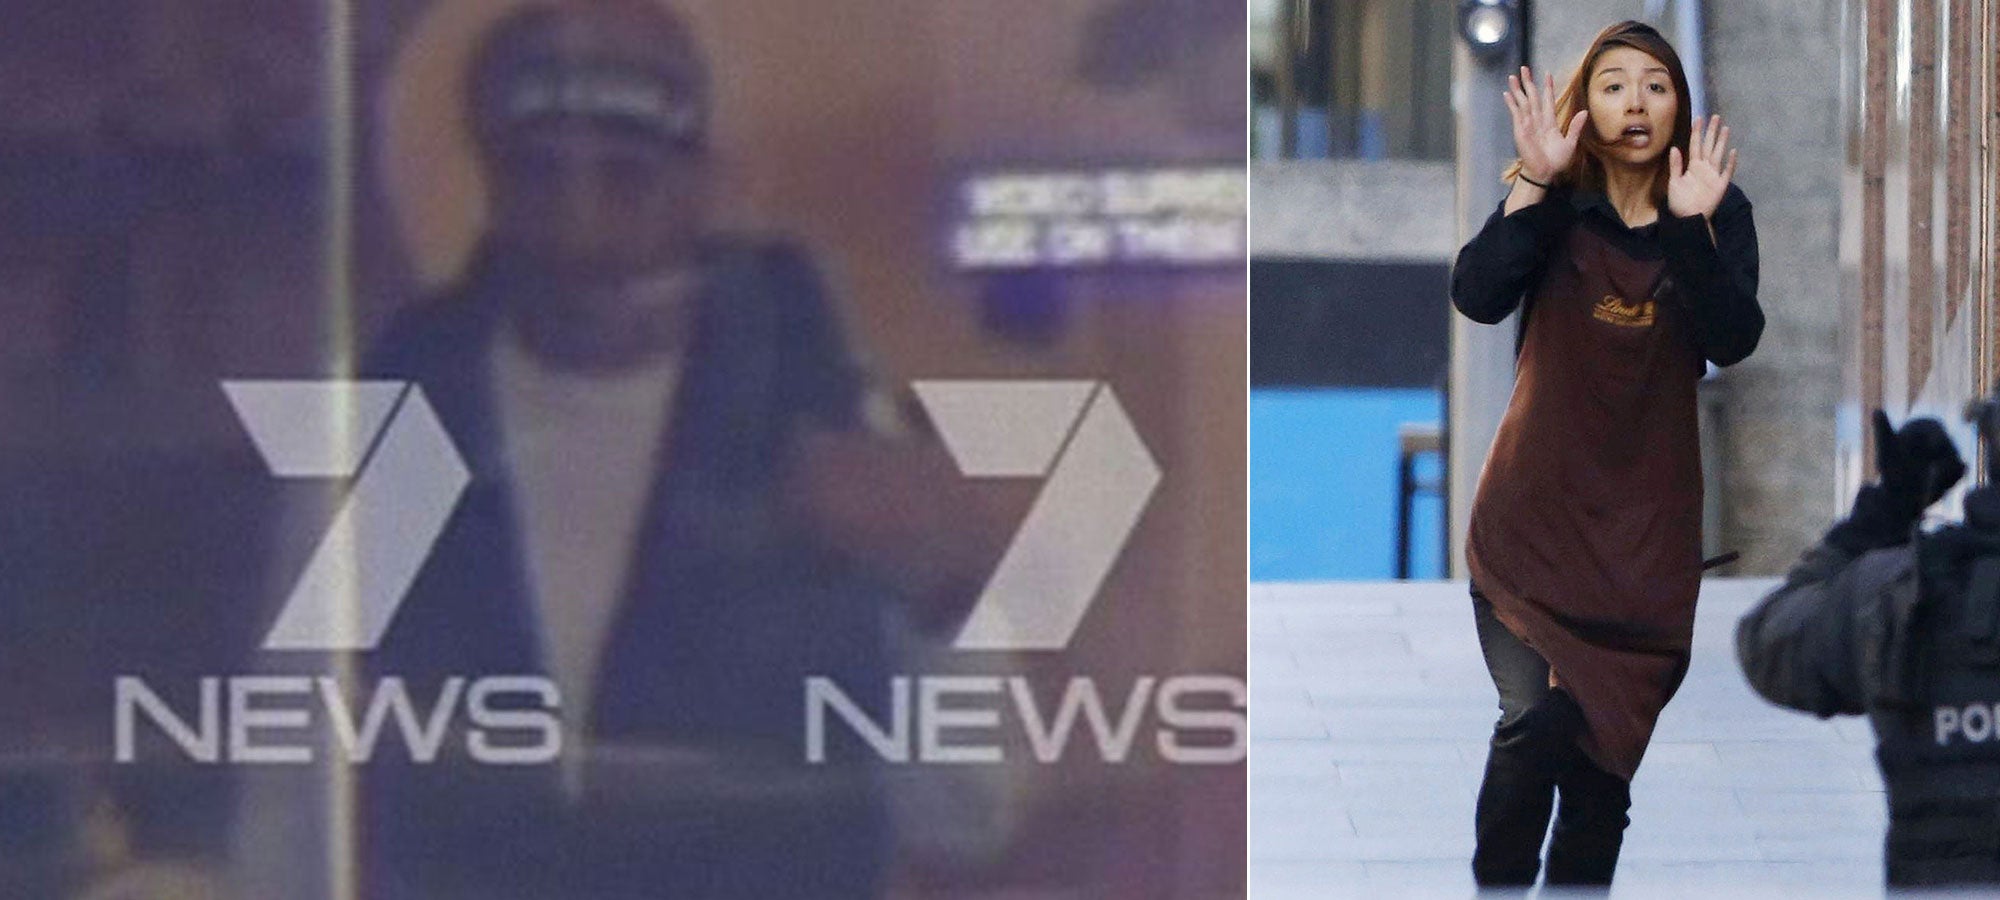 The gunman is demanding to meet with Australian PM Tony Abbott